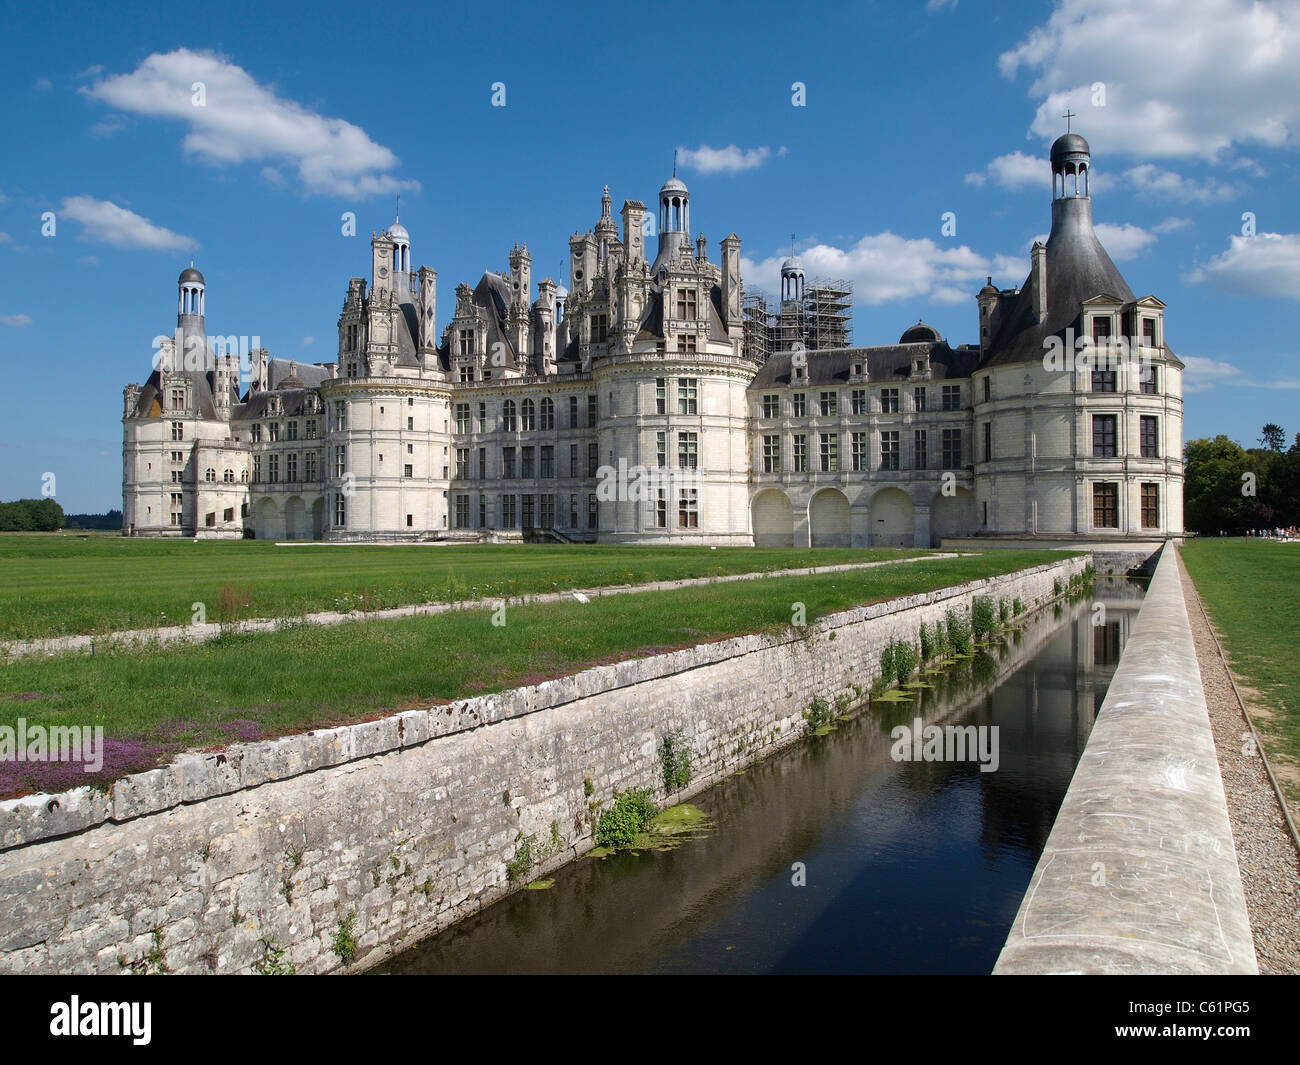 Chateau Royal de Chambord, Loire valley, France Stock Photo